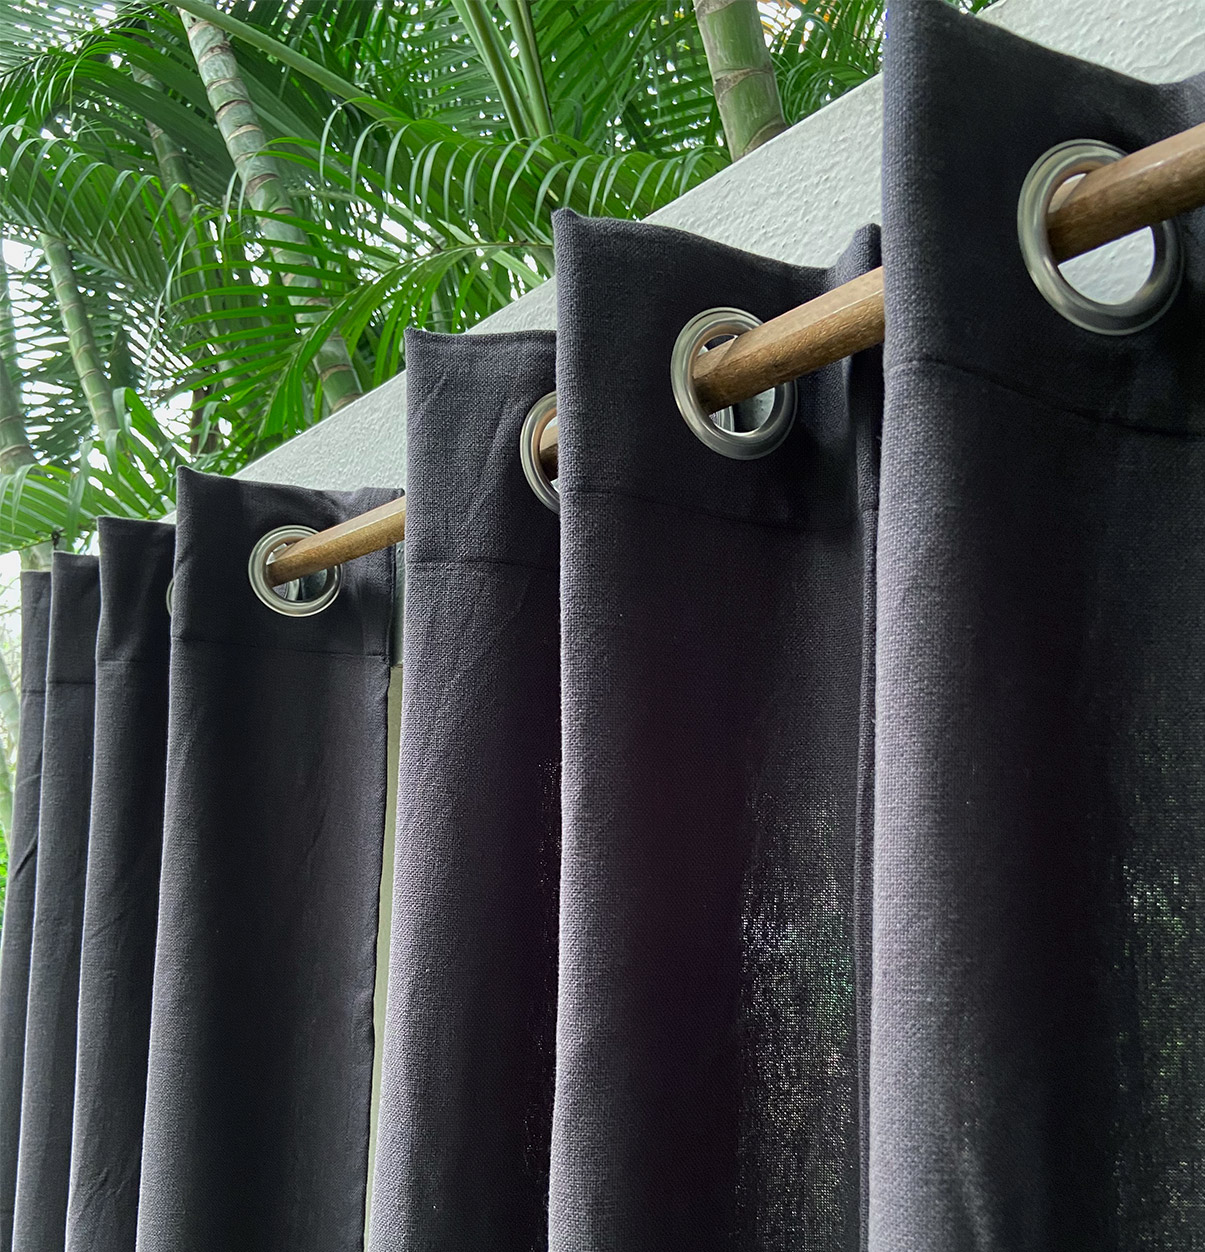 Customizable Curtain, Cotton – Solid – Black